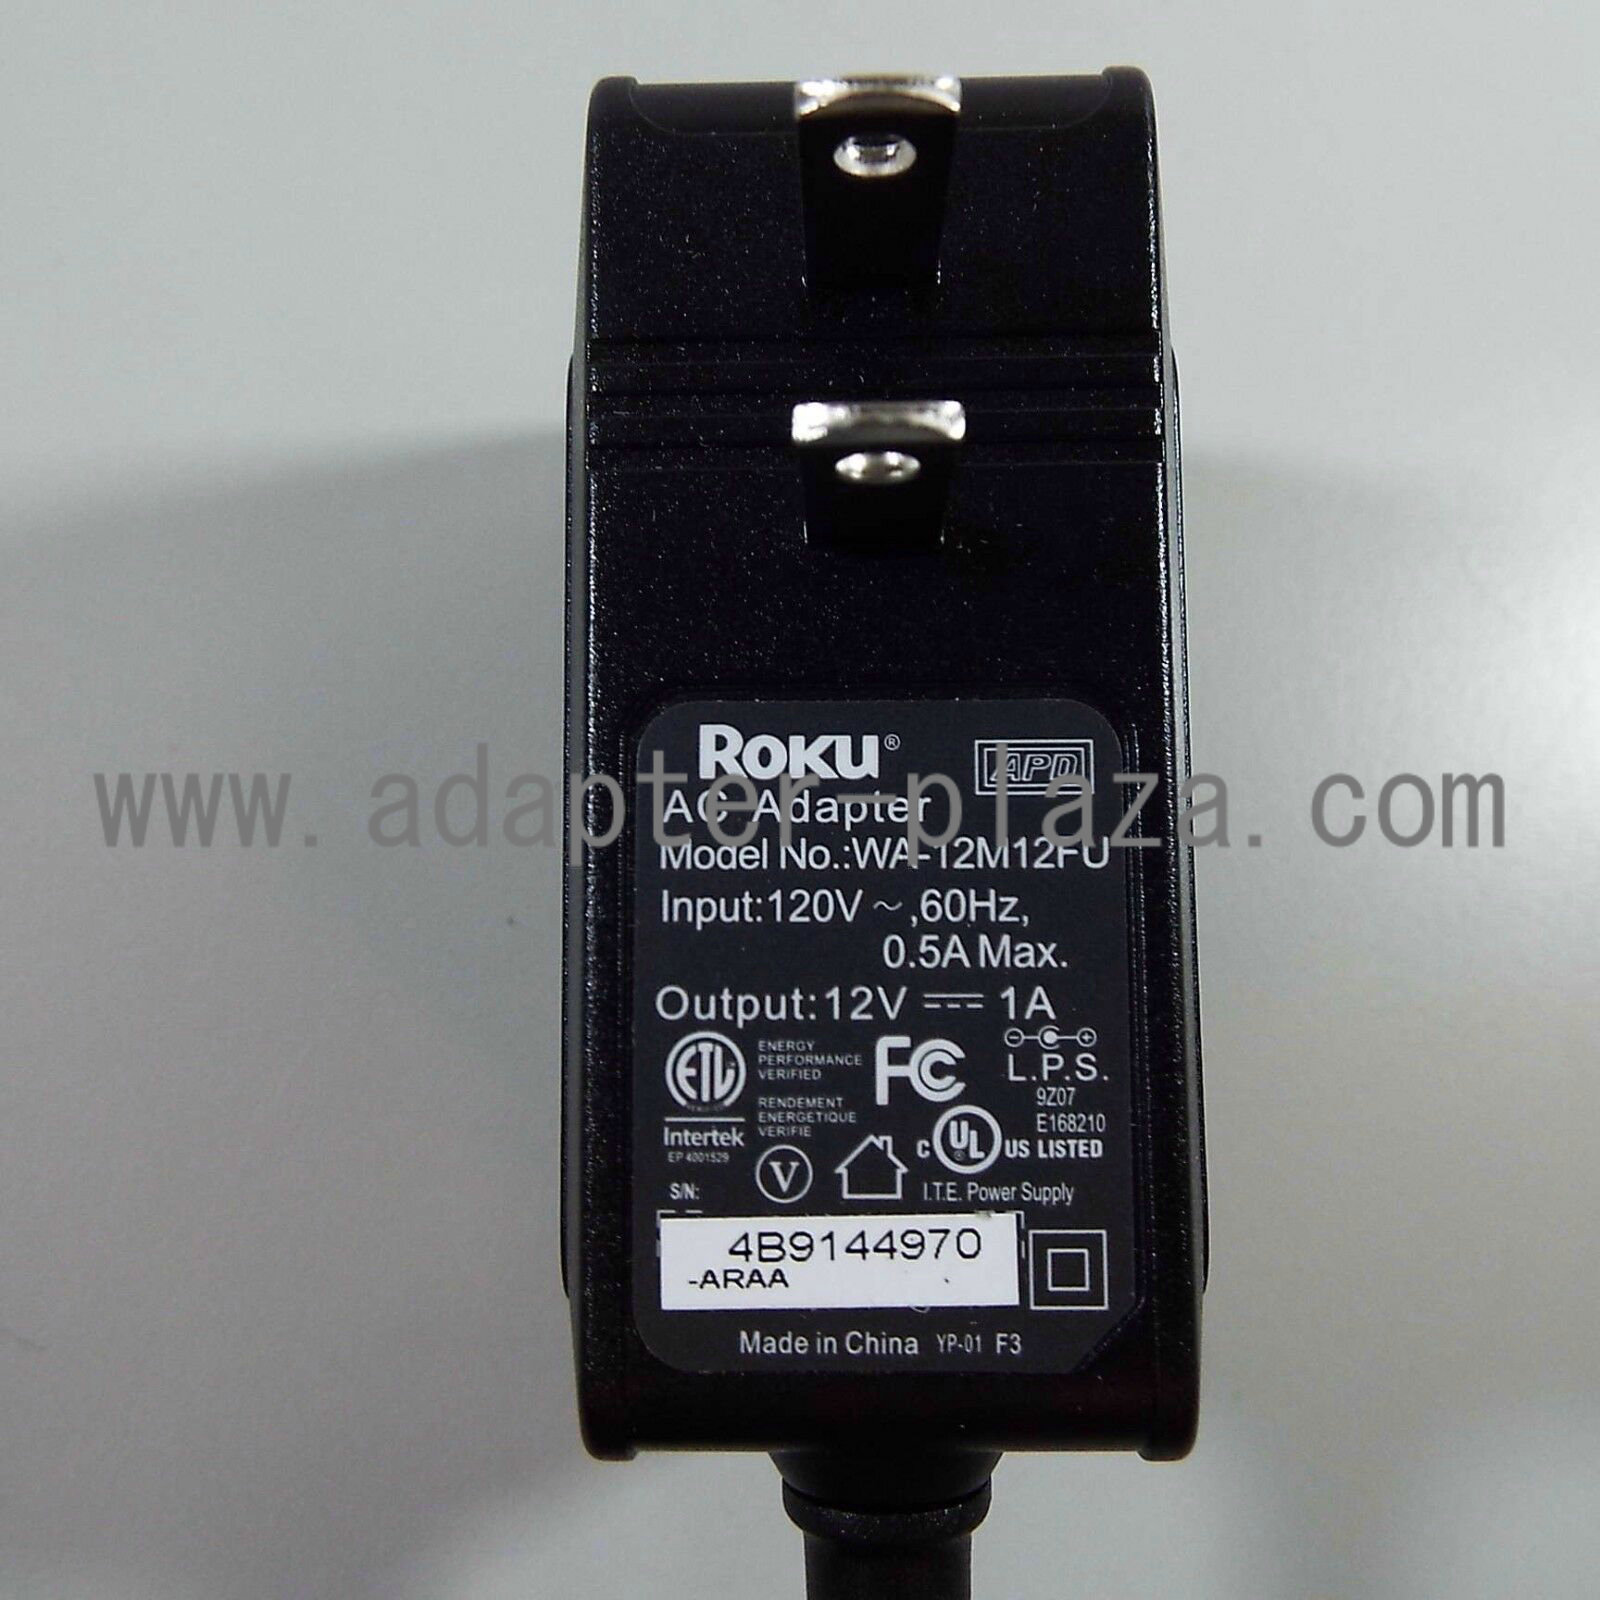 *Brand NEW* 12V 1A AC DC Adapter ROKU WA-12M12FU (B700) POWER SUPPLY - Click Image to Close